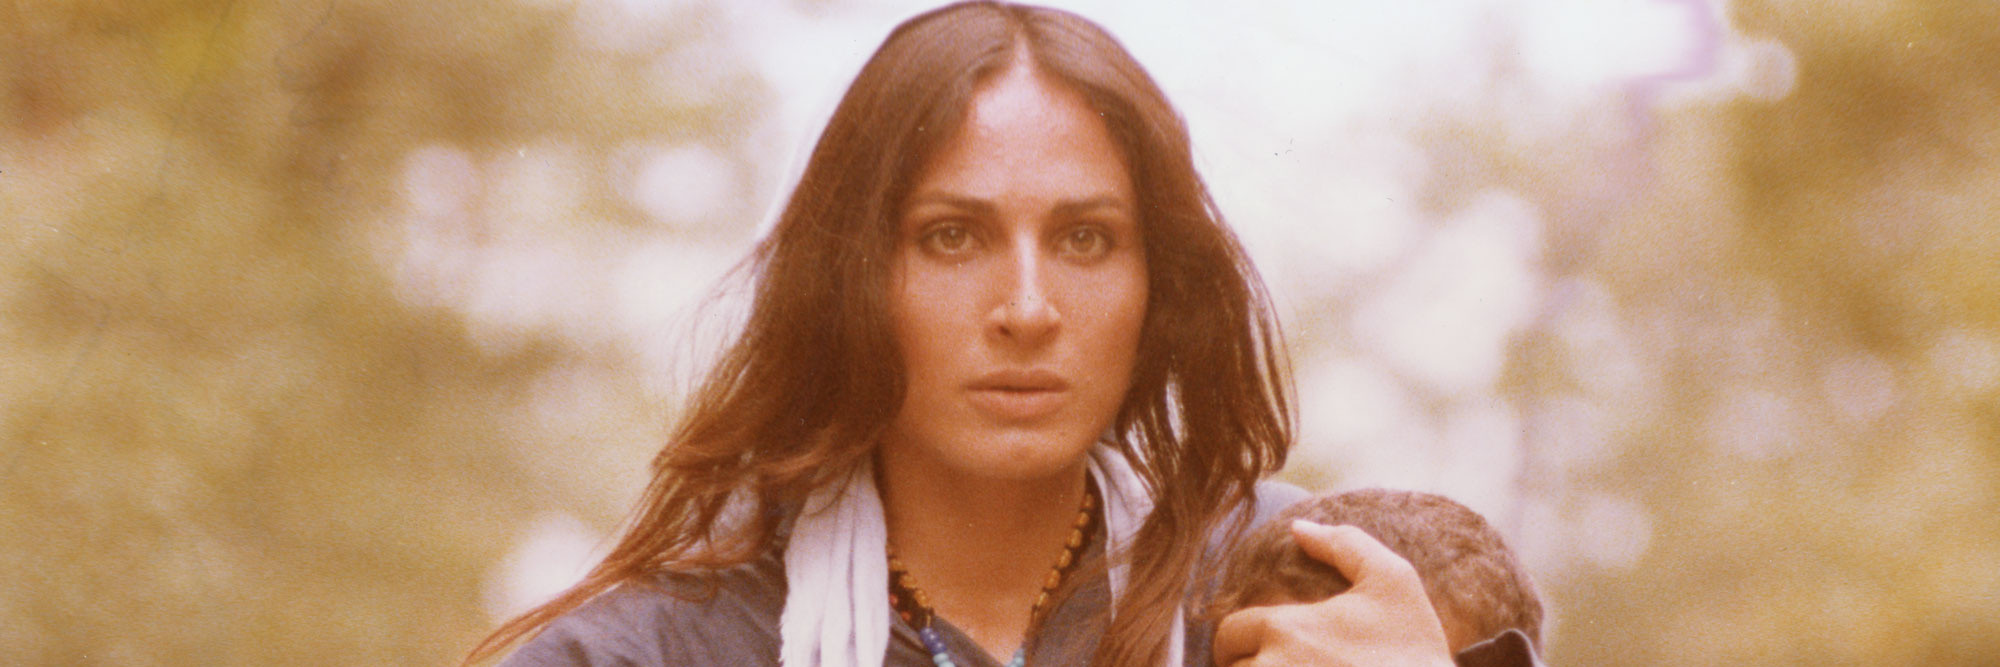 Cherike-ye Tara (The Ballad of Tara). 1979. Iran. Written and directed by Bahram Beyzaie. Courtesy the filmmaker